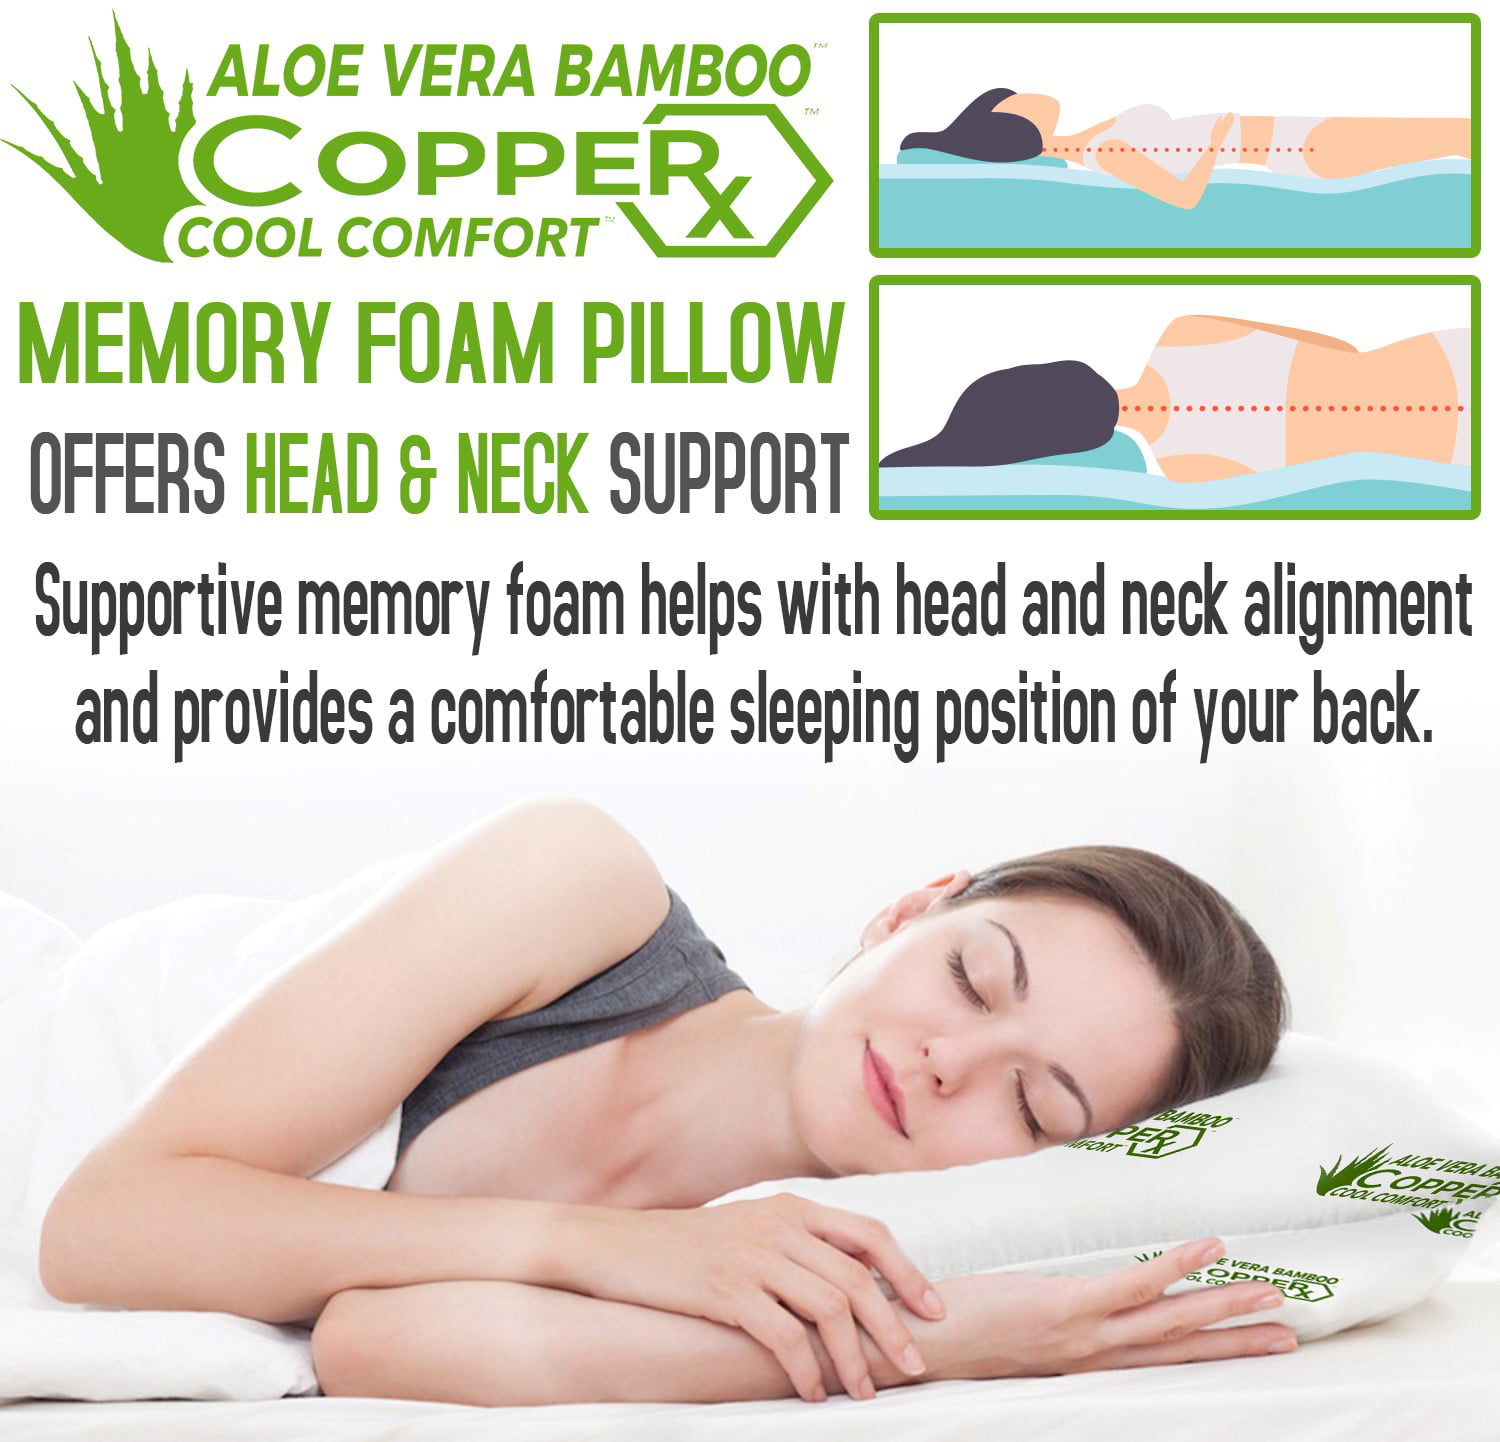 NEW Hypoallergenic Aloe Vera Bamboo COOLING Body Pillow Migraine Eco Friendly 